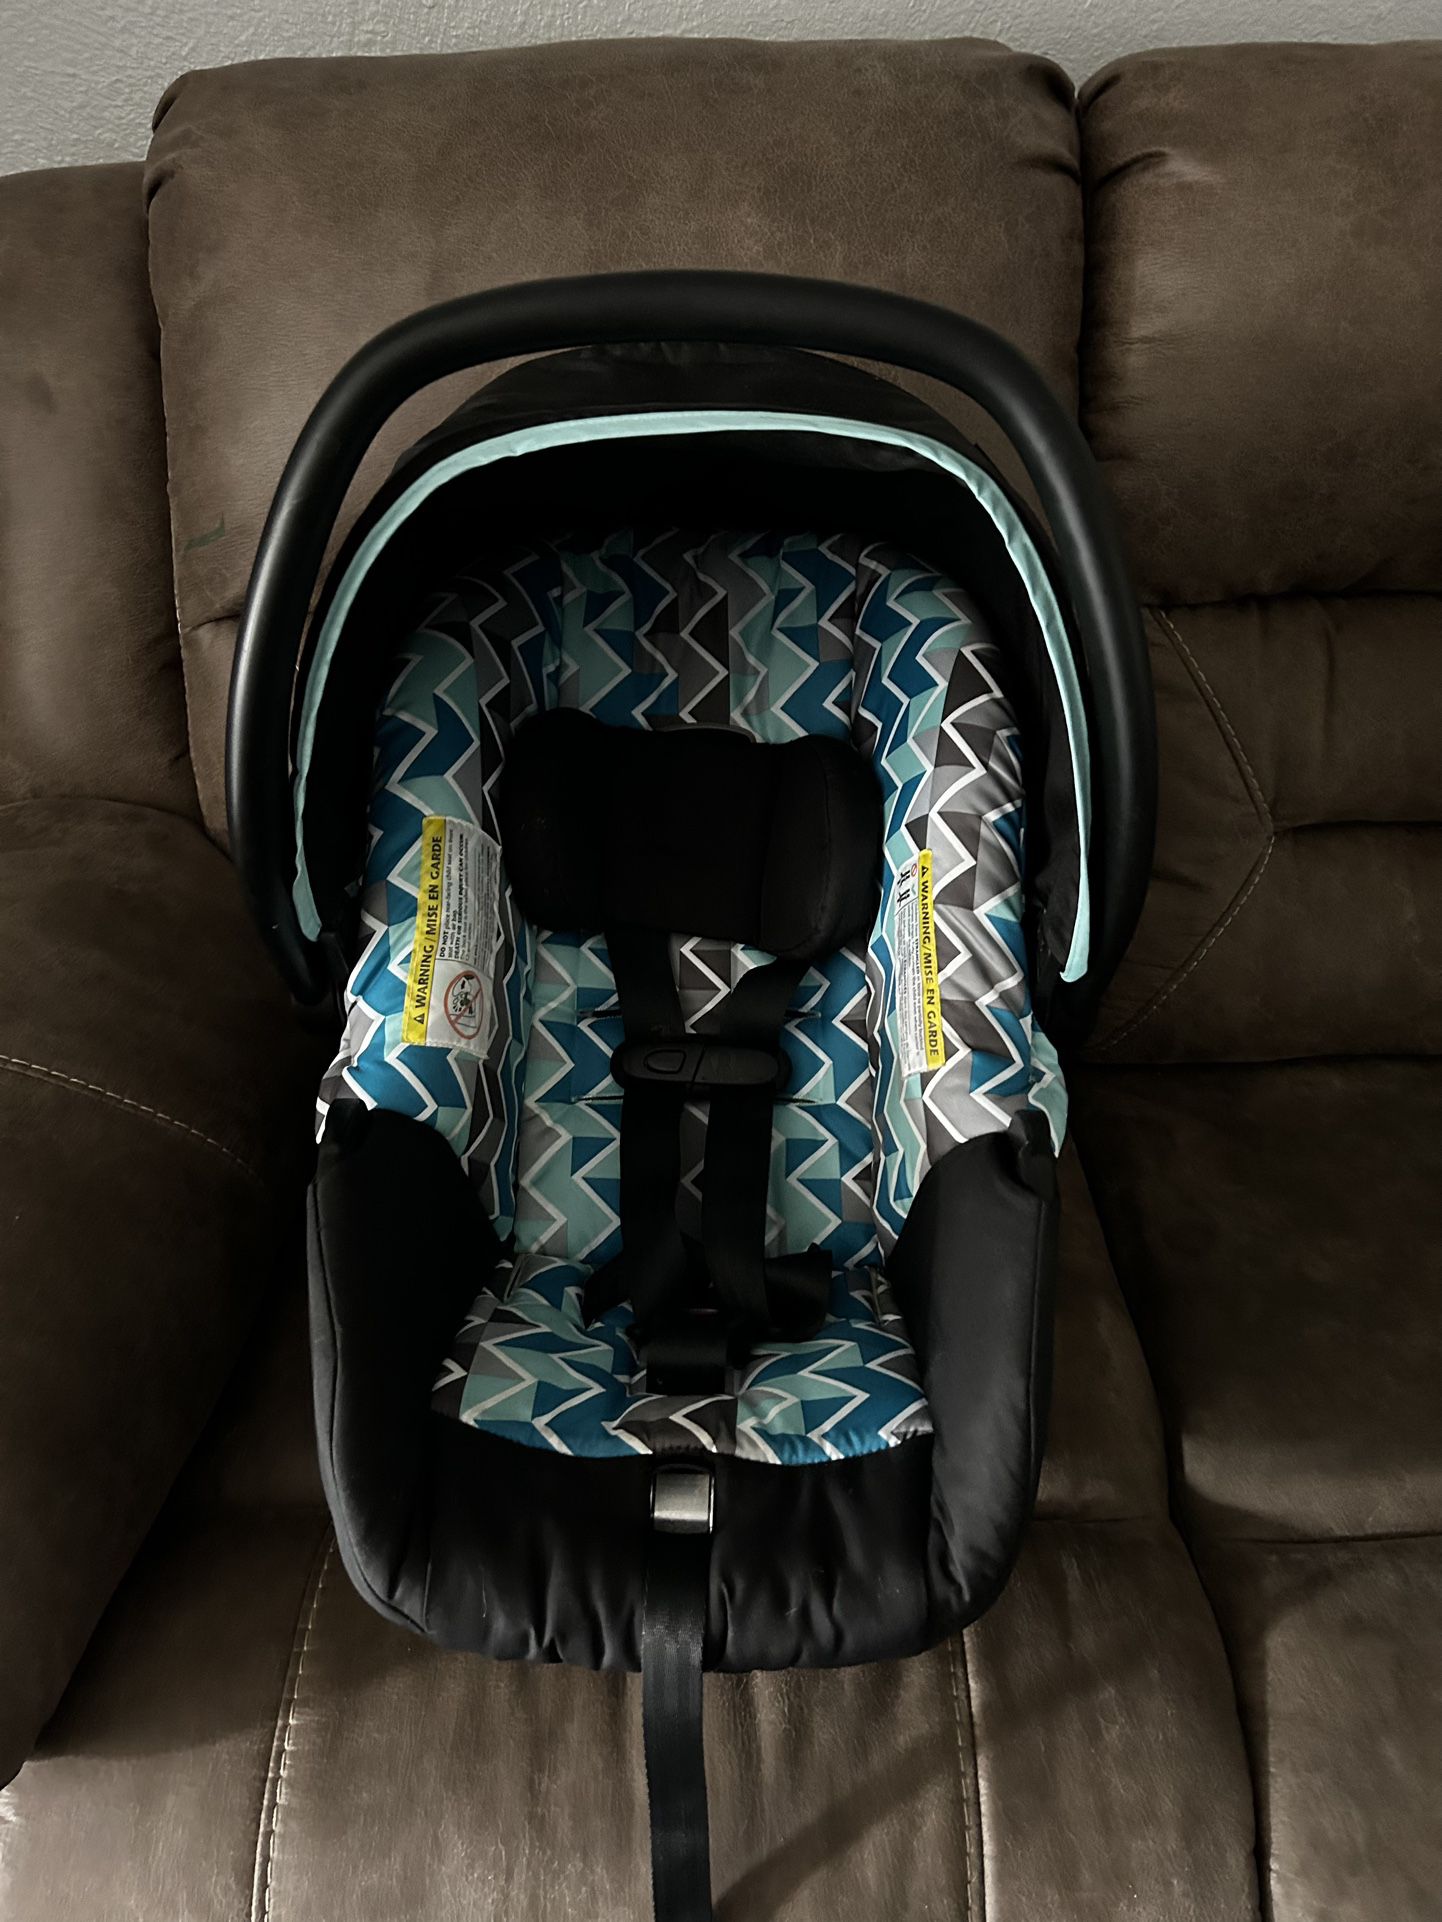 Evenflo infant baby Car Seat 